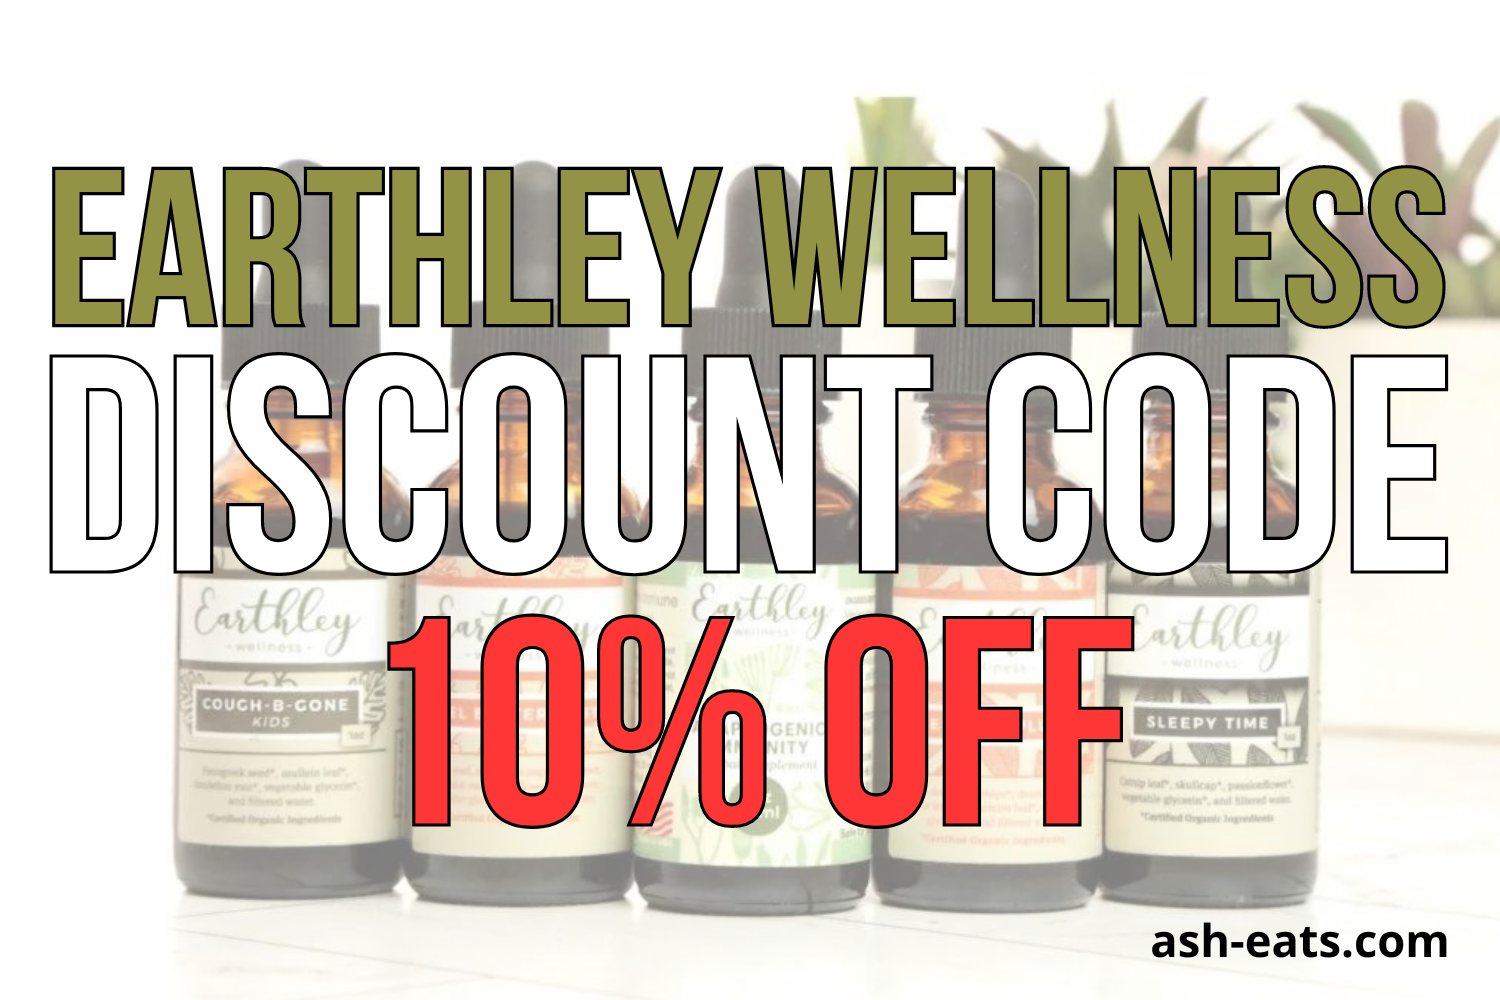 earthley wellness discount code